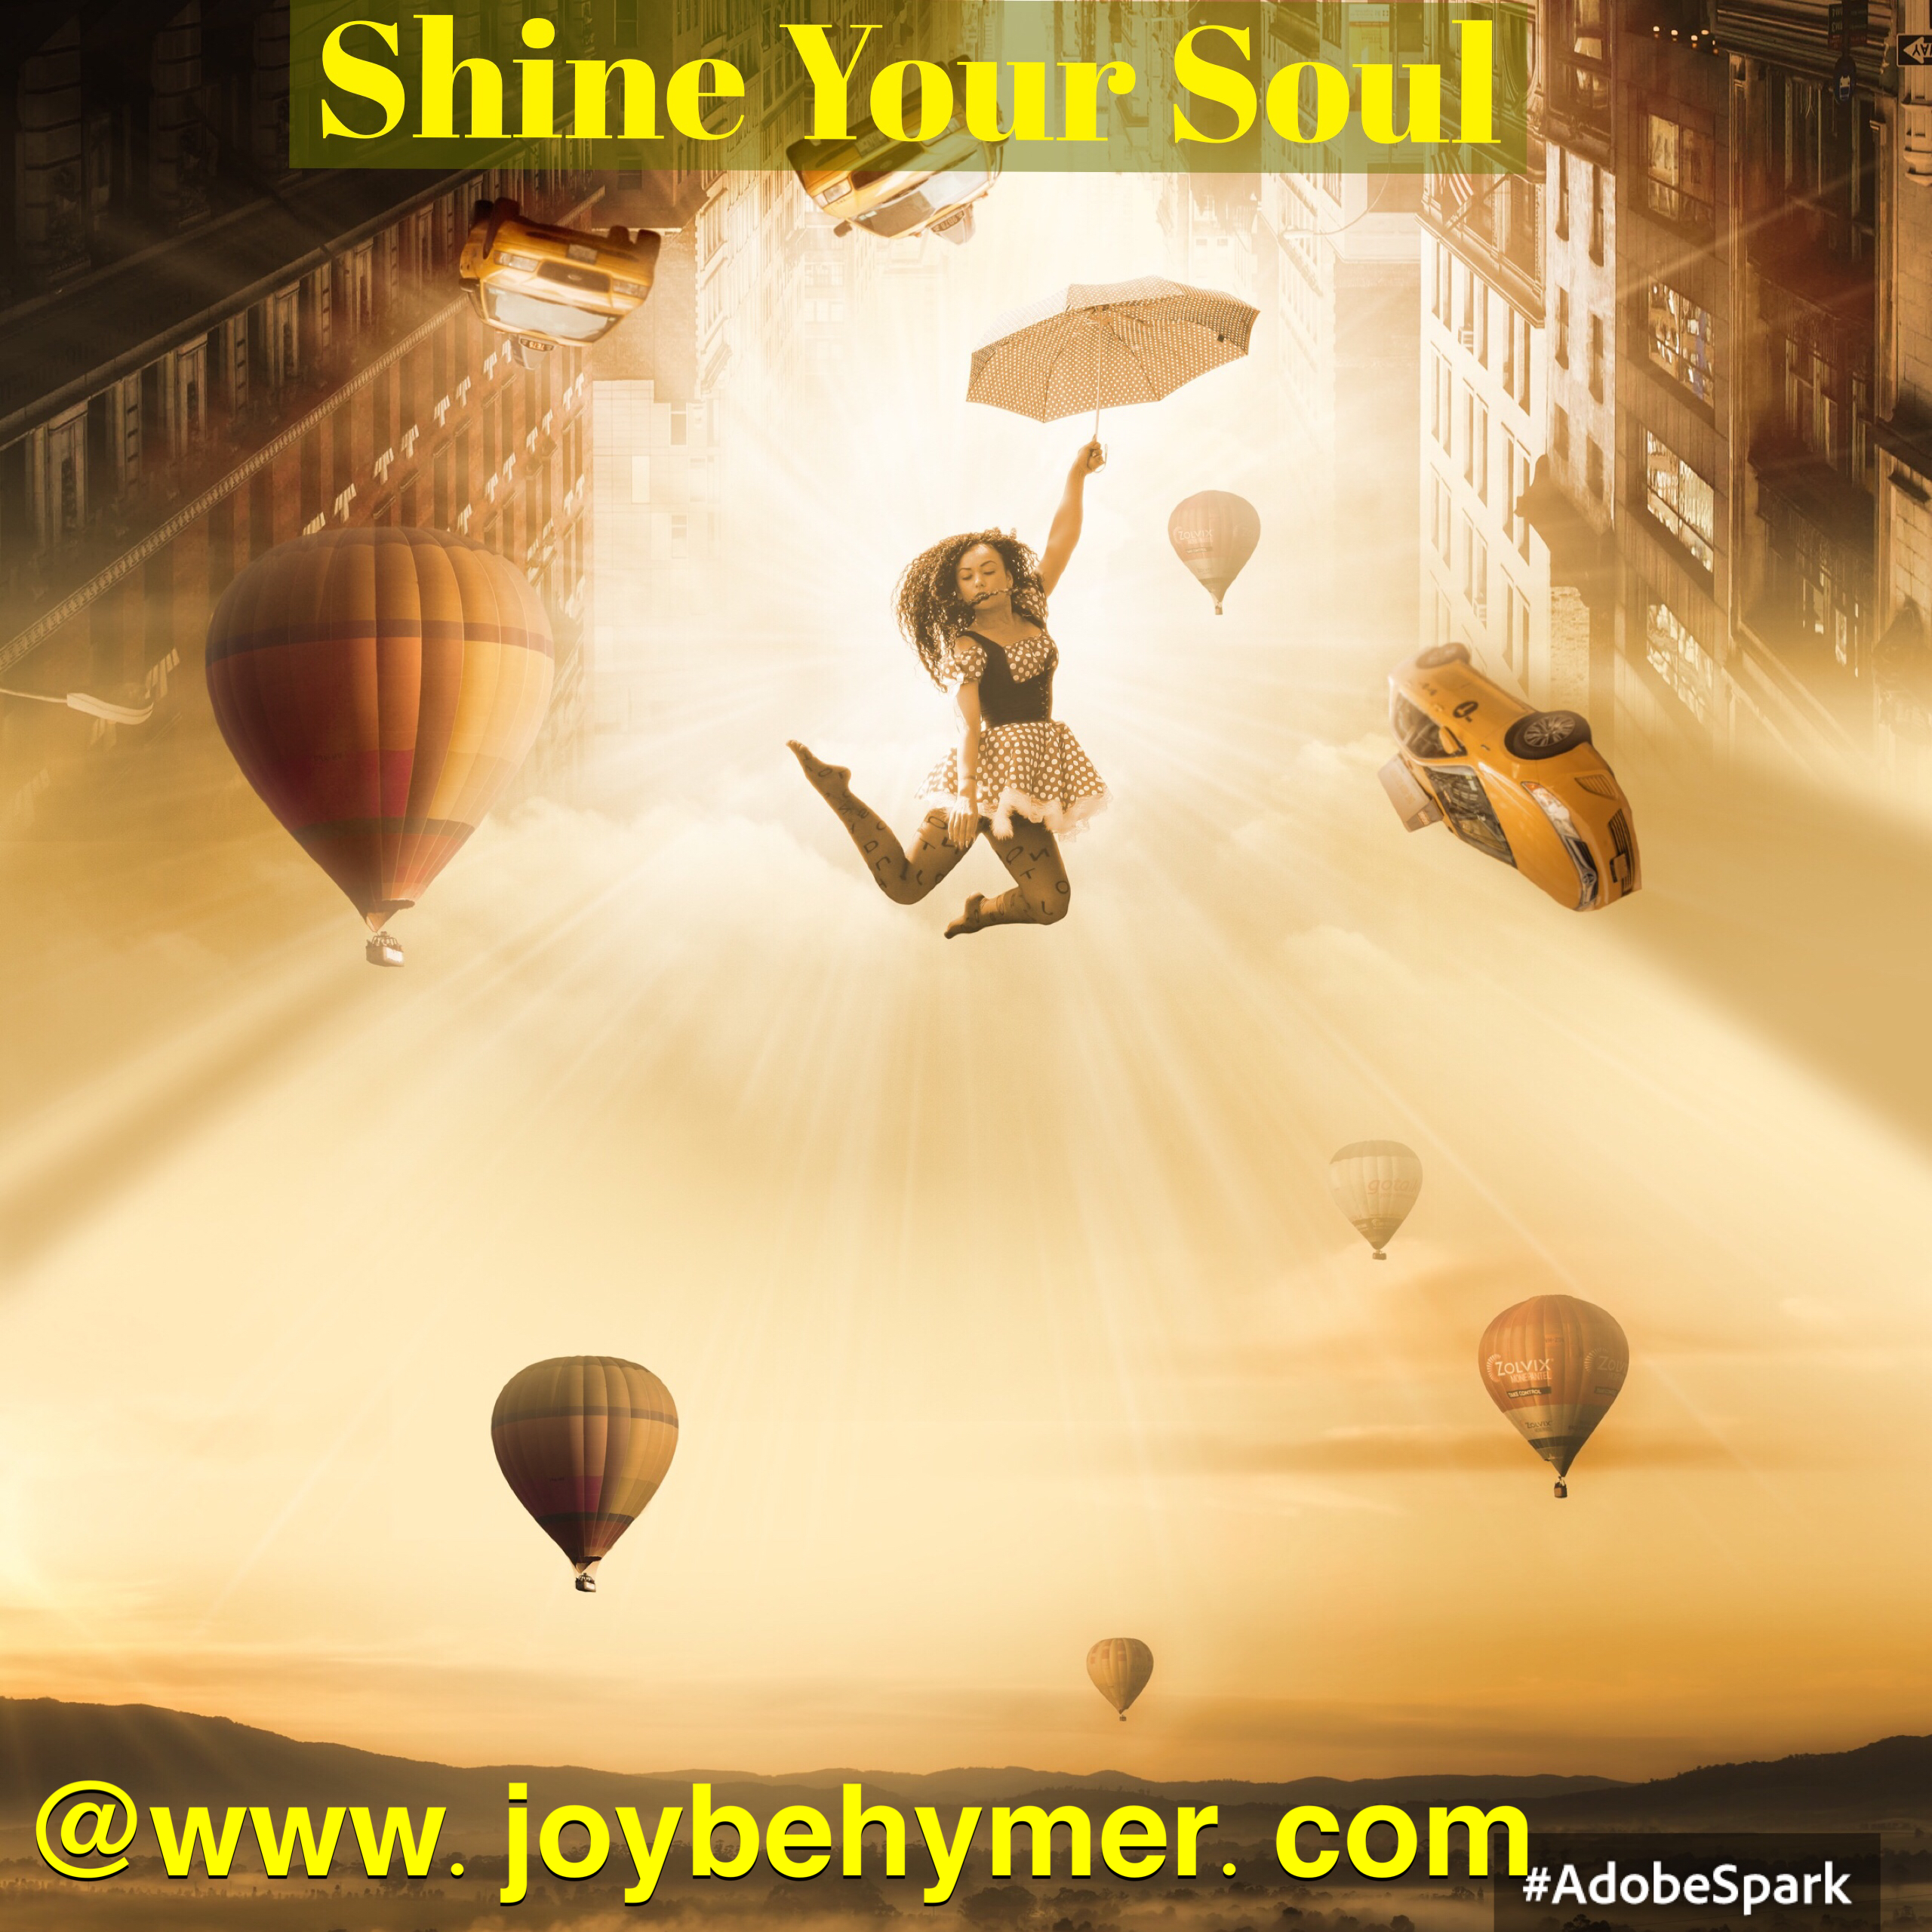 Shine your soul